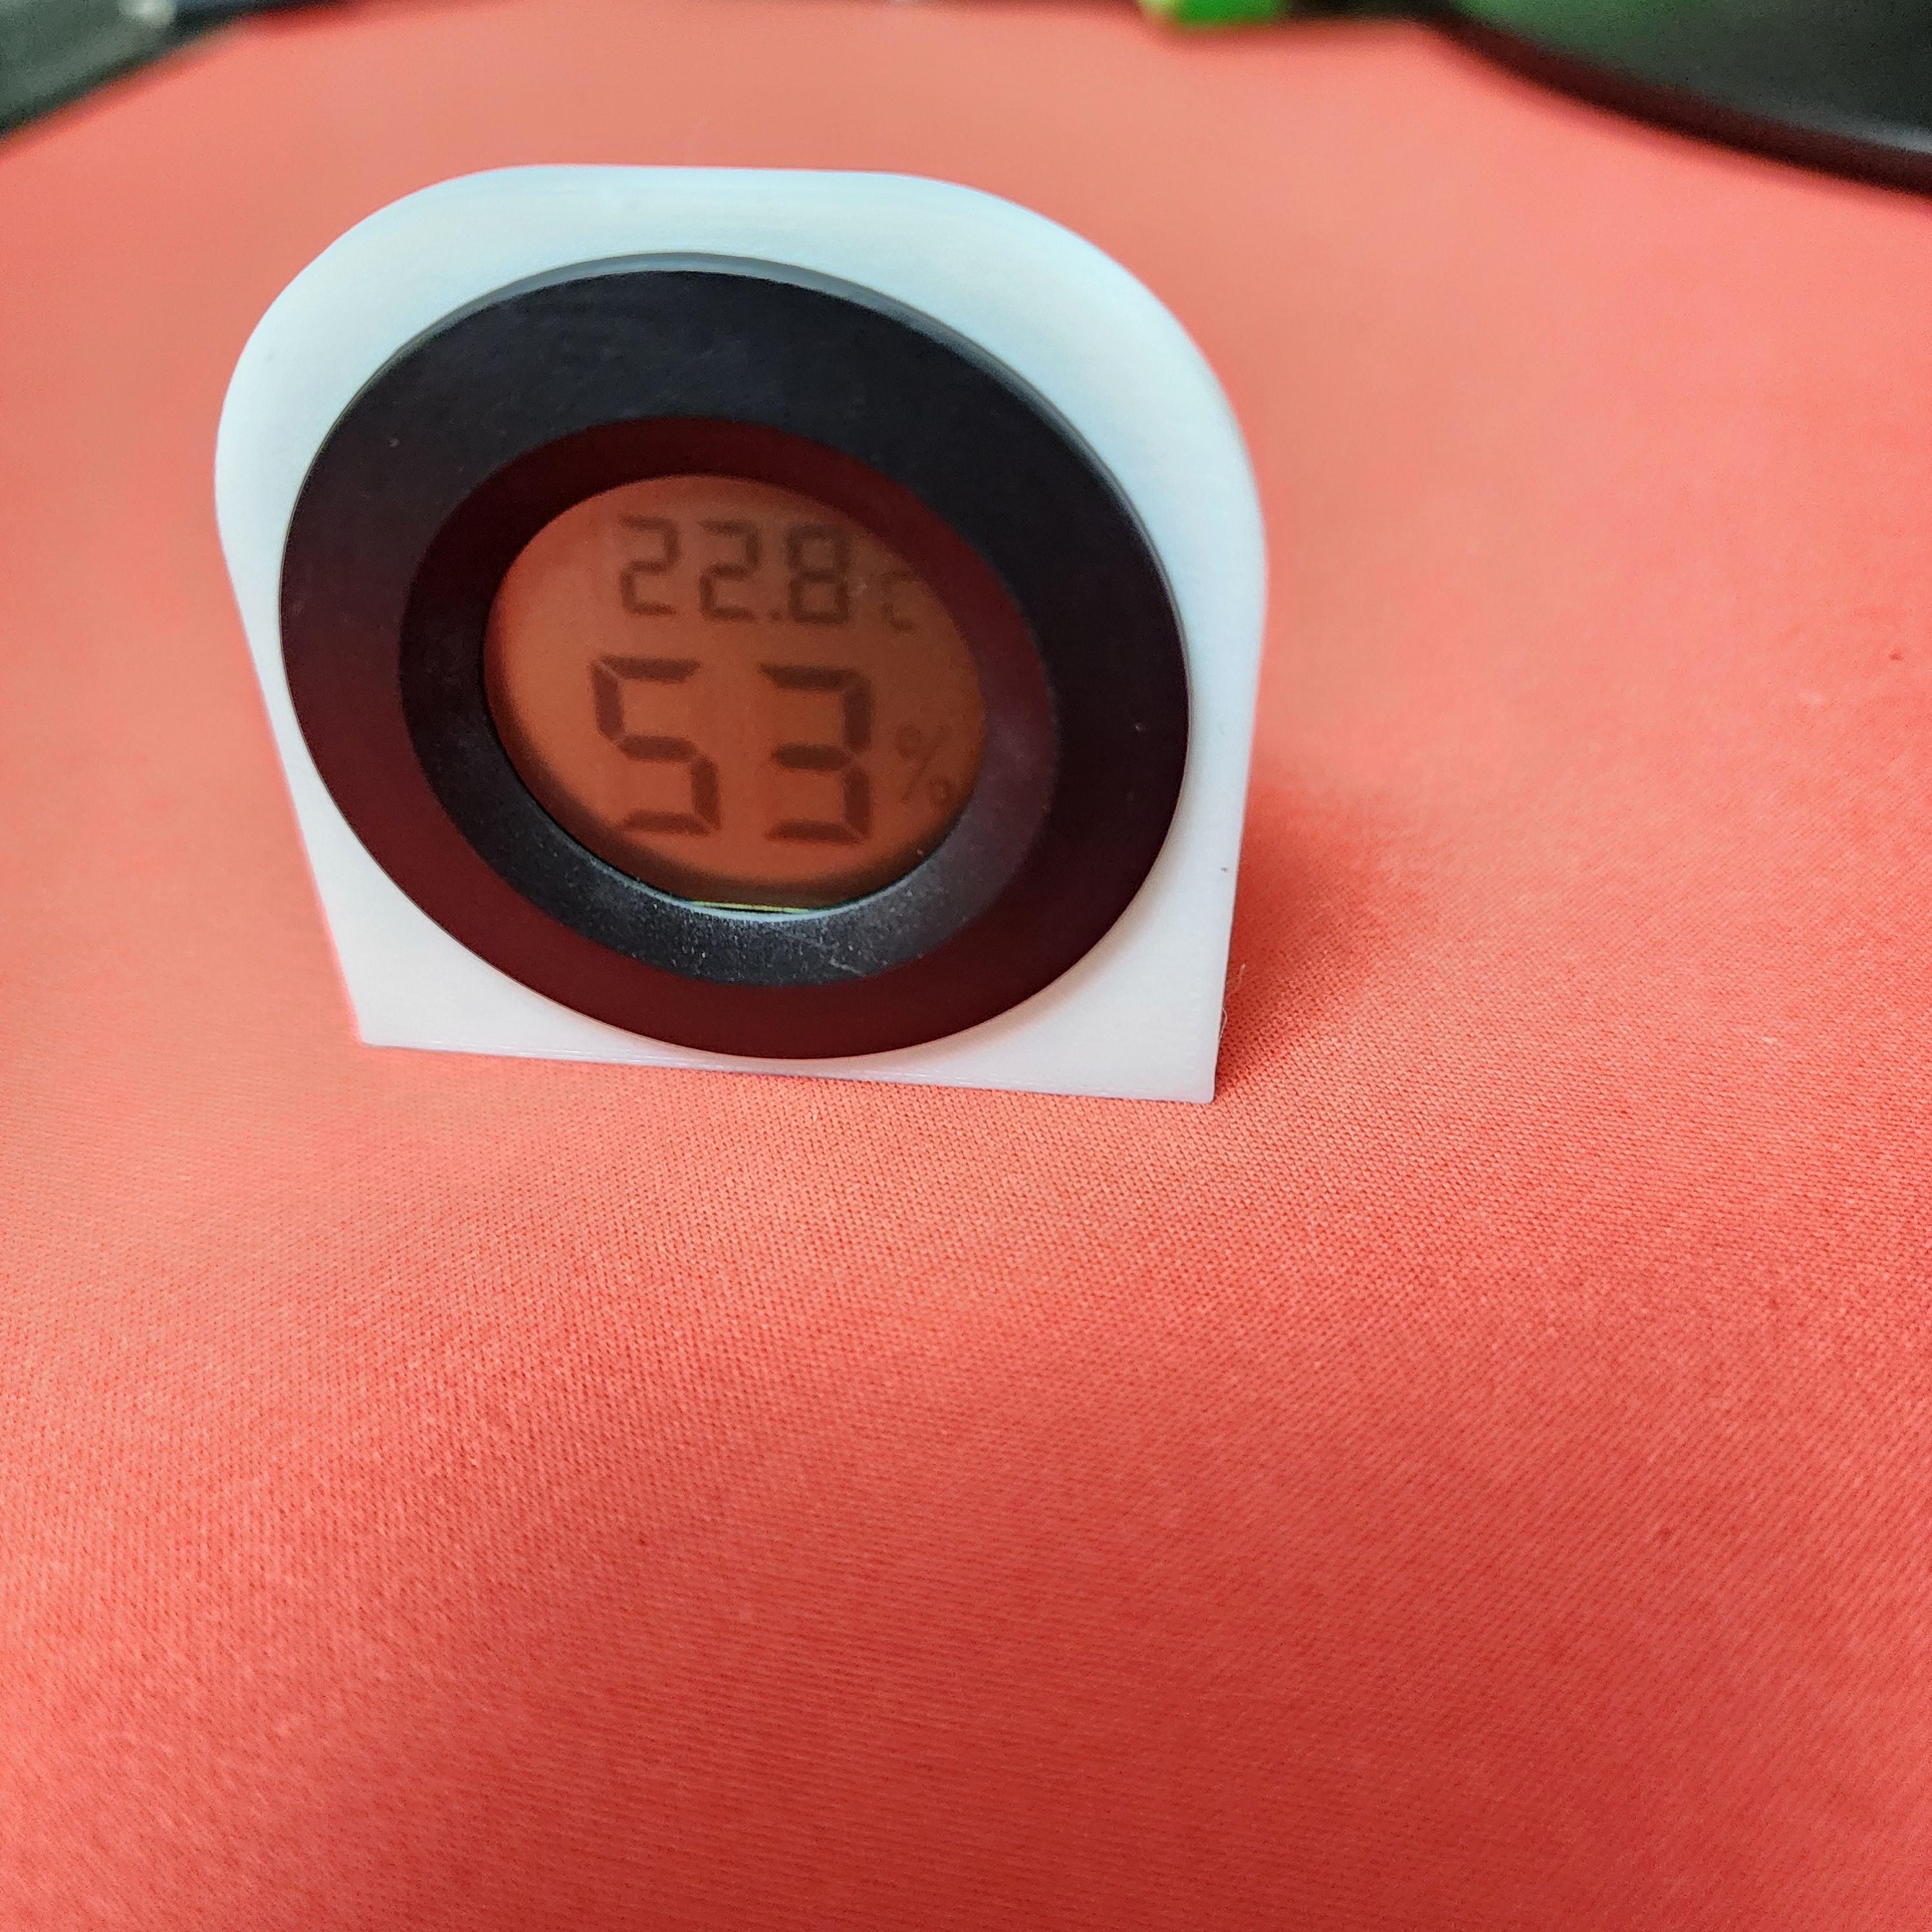 3D printable 1,5 Digital Thermometer Hygrometer holder • made